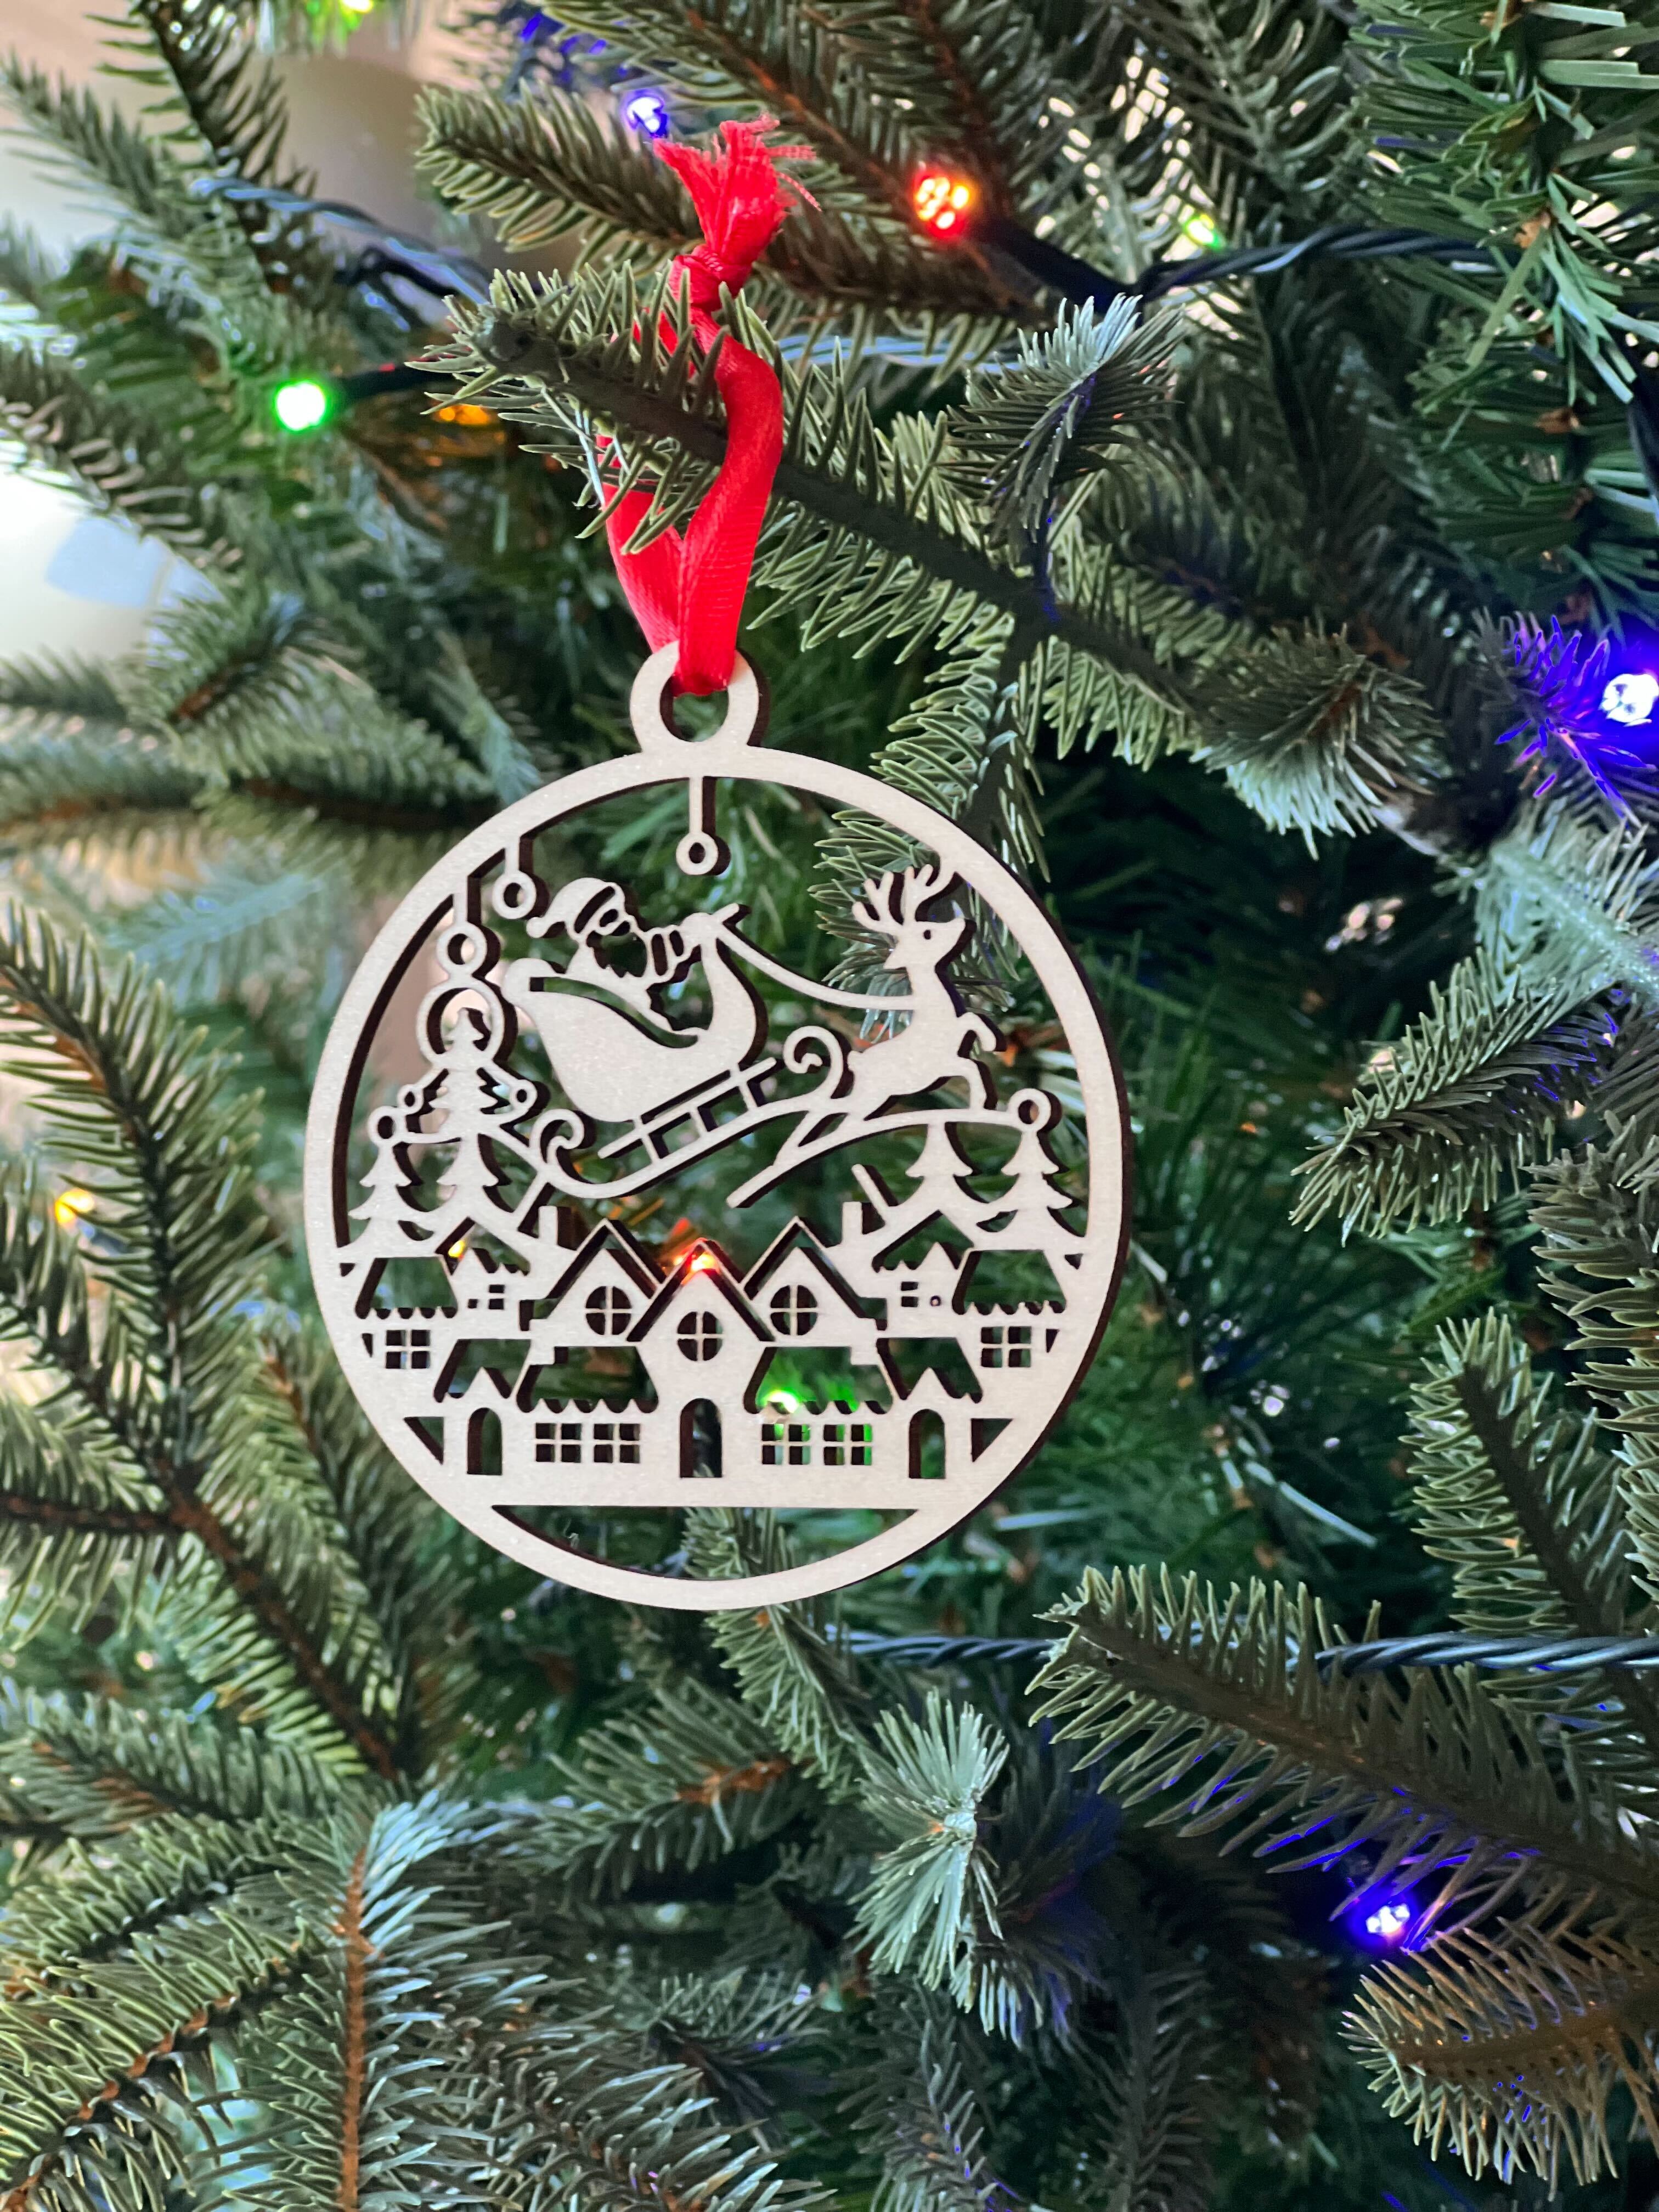 Ornament hanging on tree